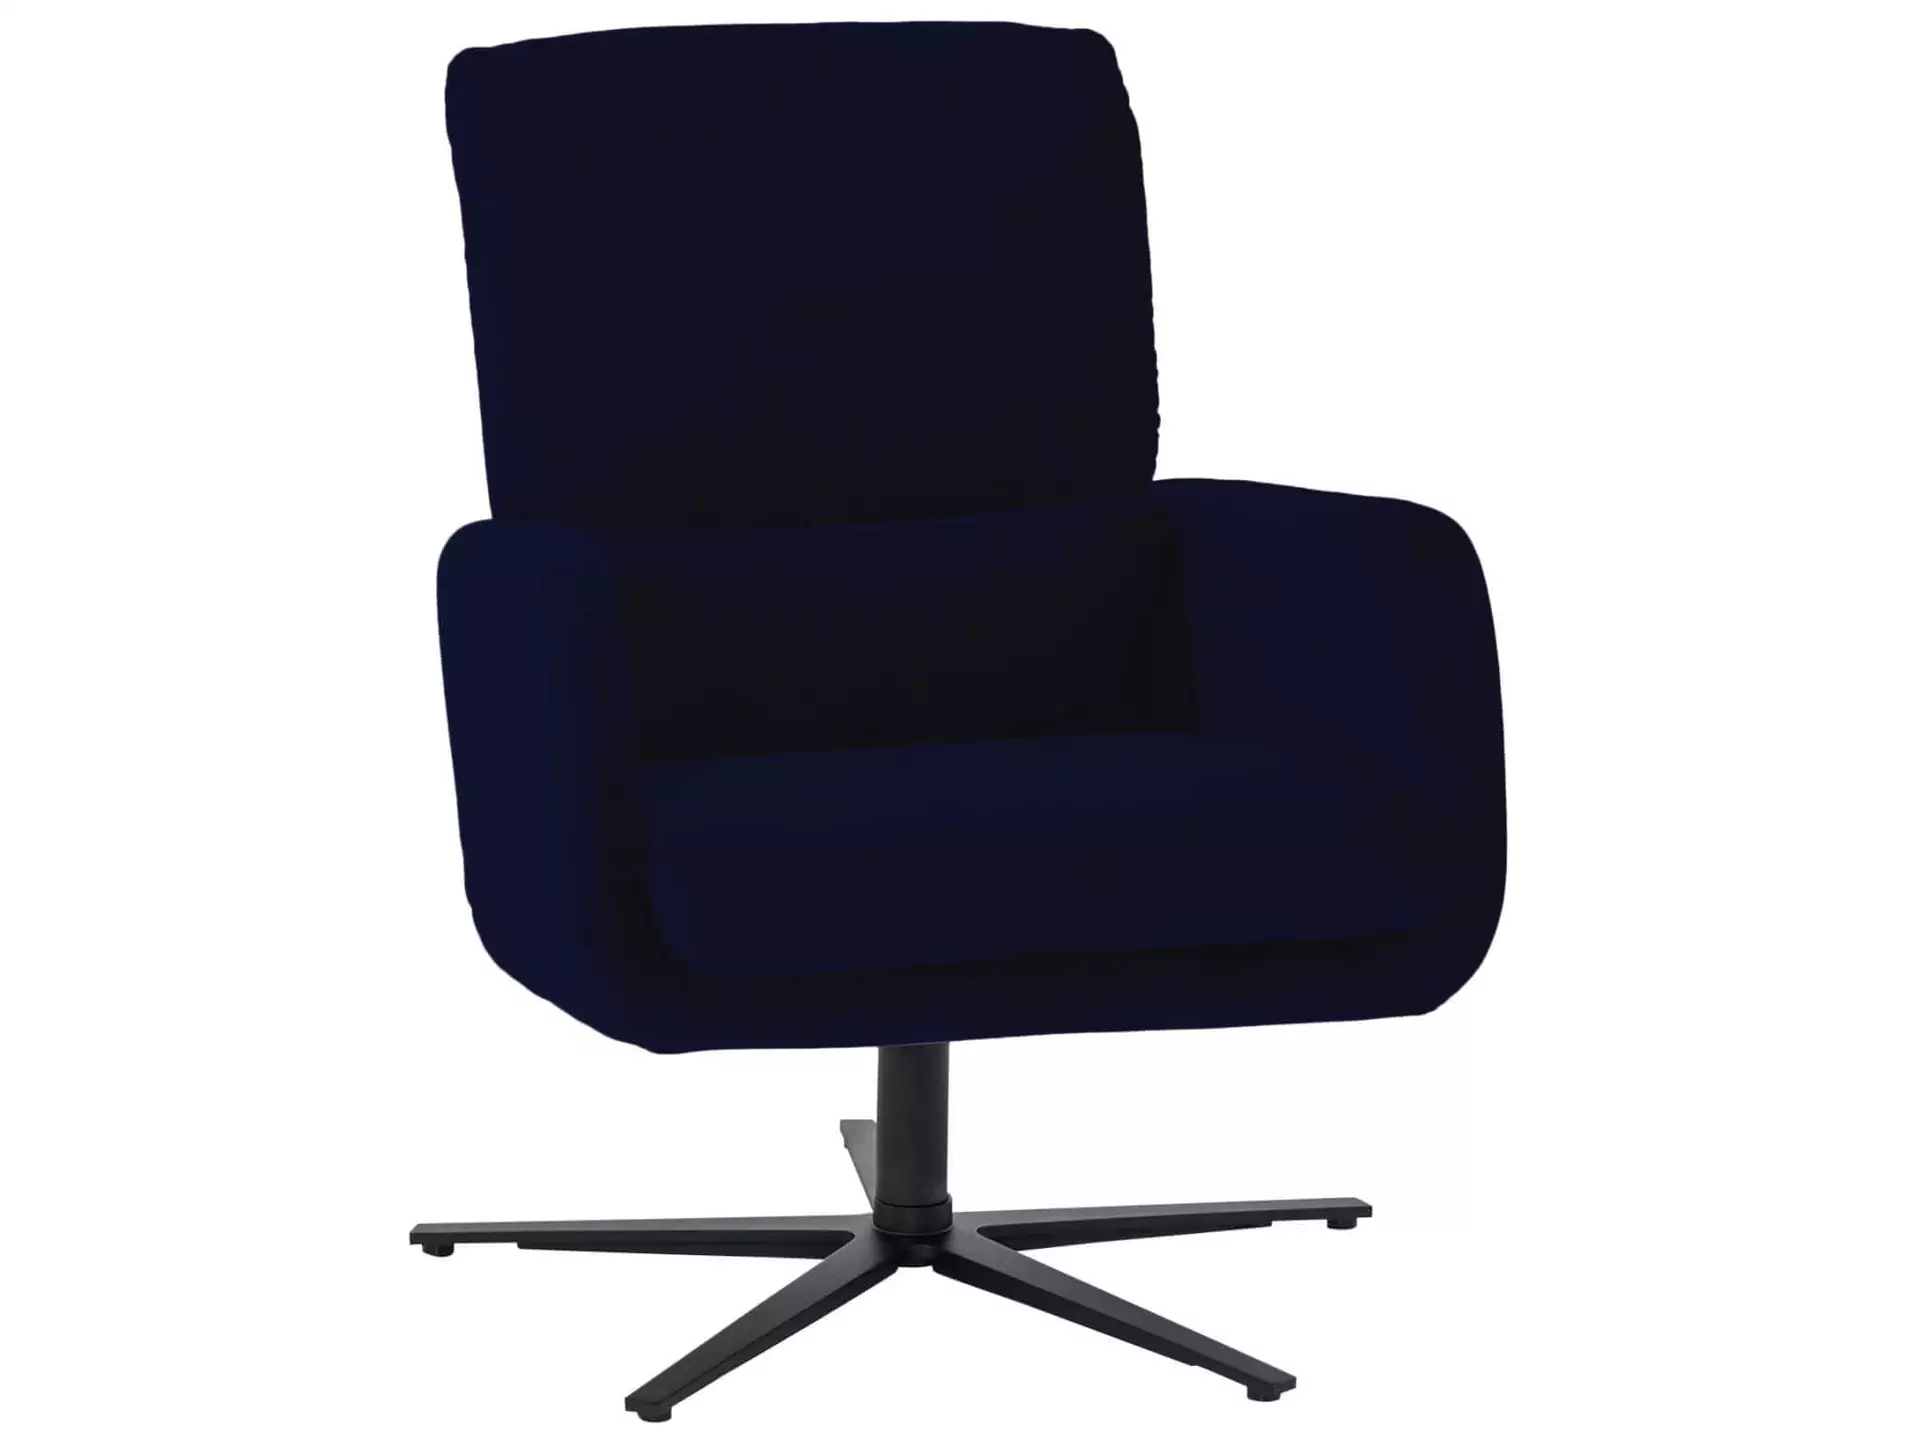 Sessel 8155 Basic Himolla / Farbe: Marine / Material: Stoff Basic